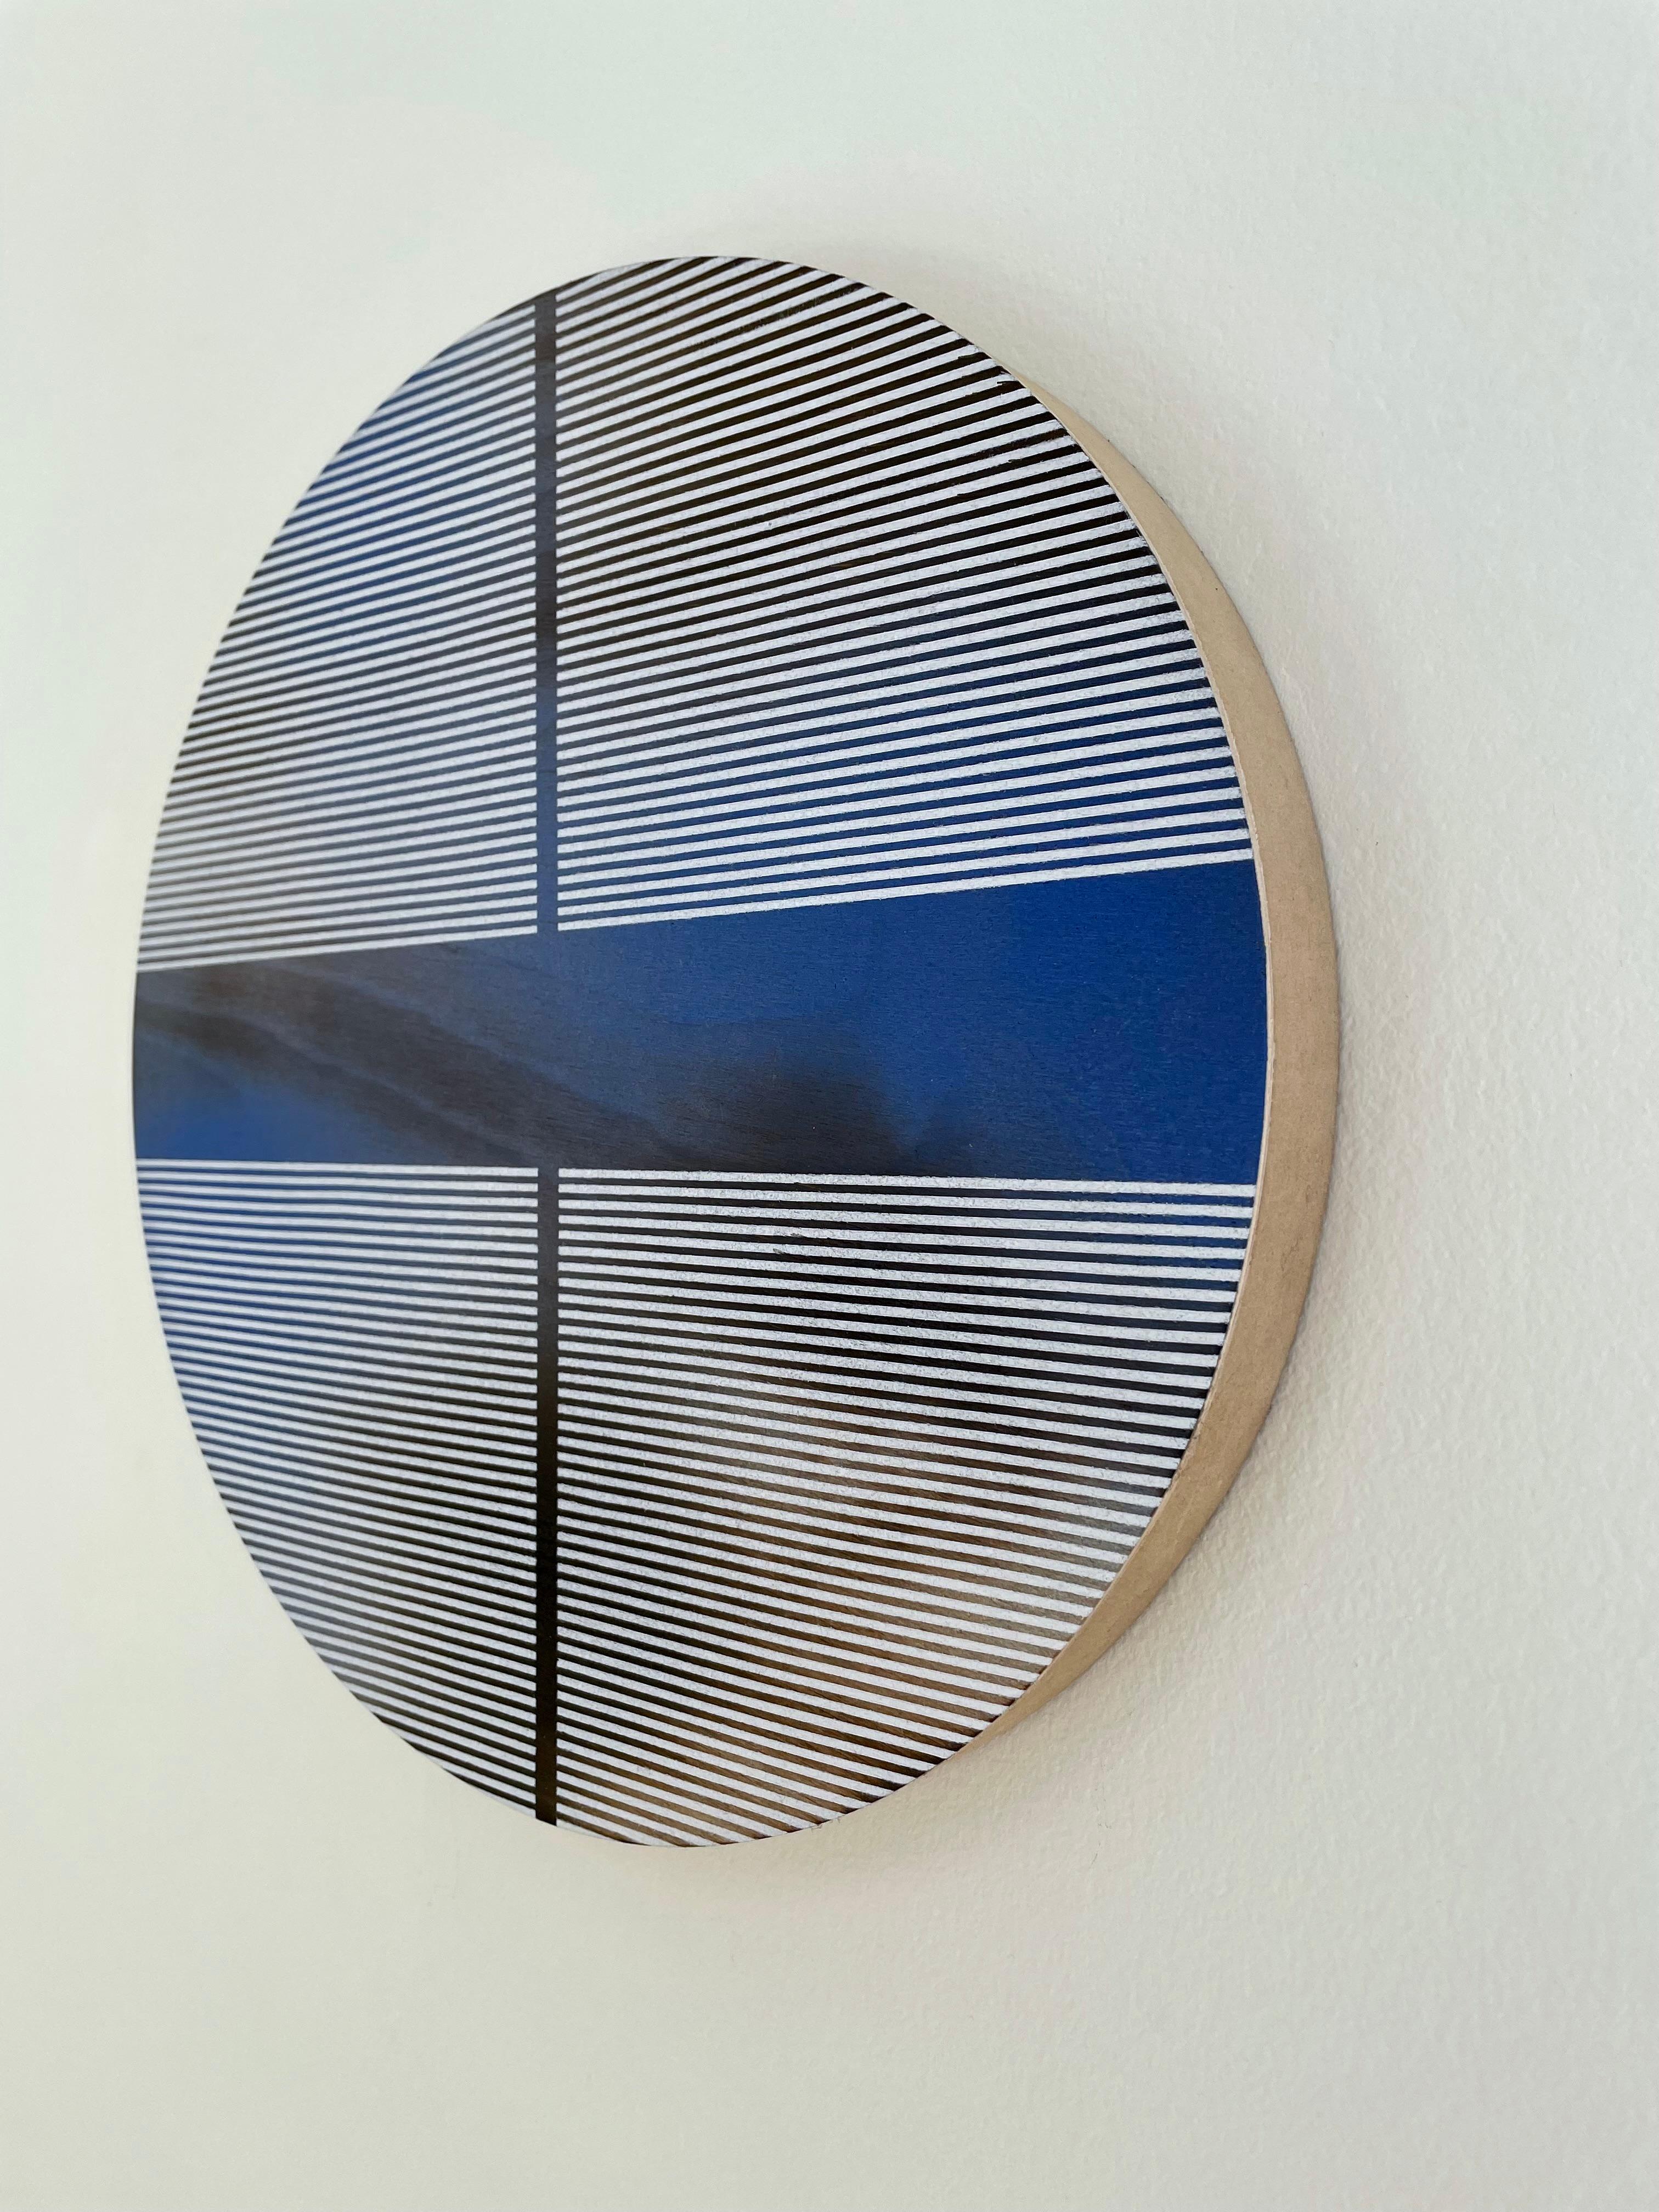 Deep ocean blue pill (minimaliste grid round painting on wood dopamine art) - Painting by Melisa Taylor Metzger